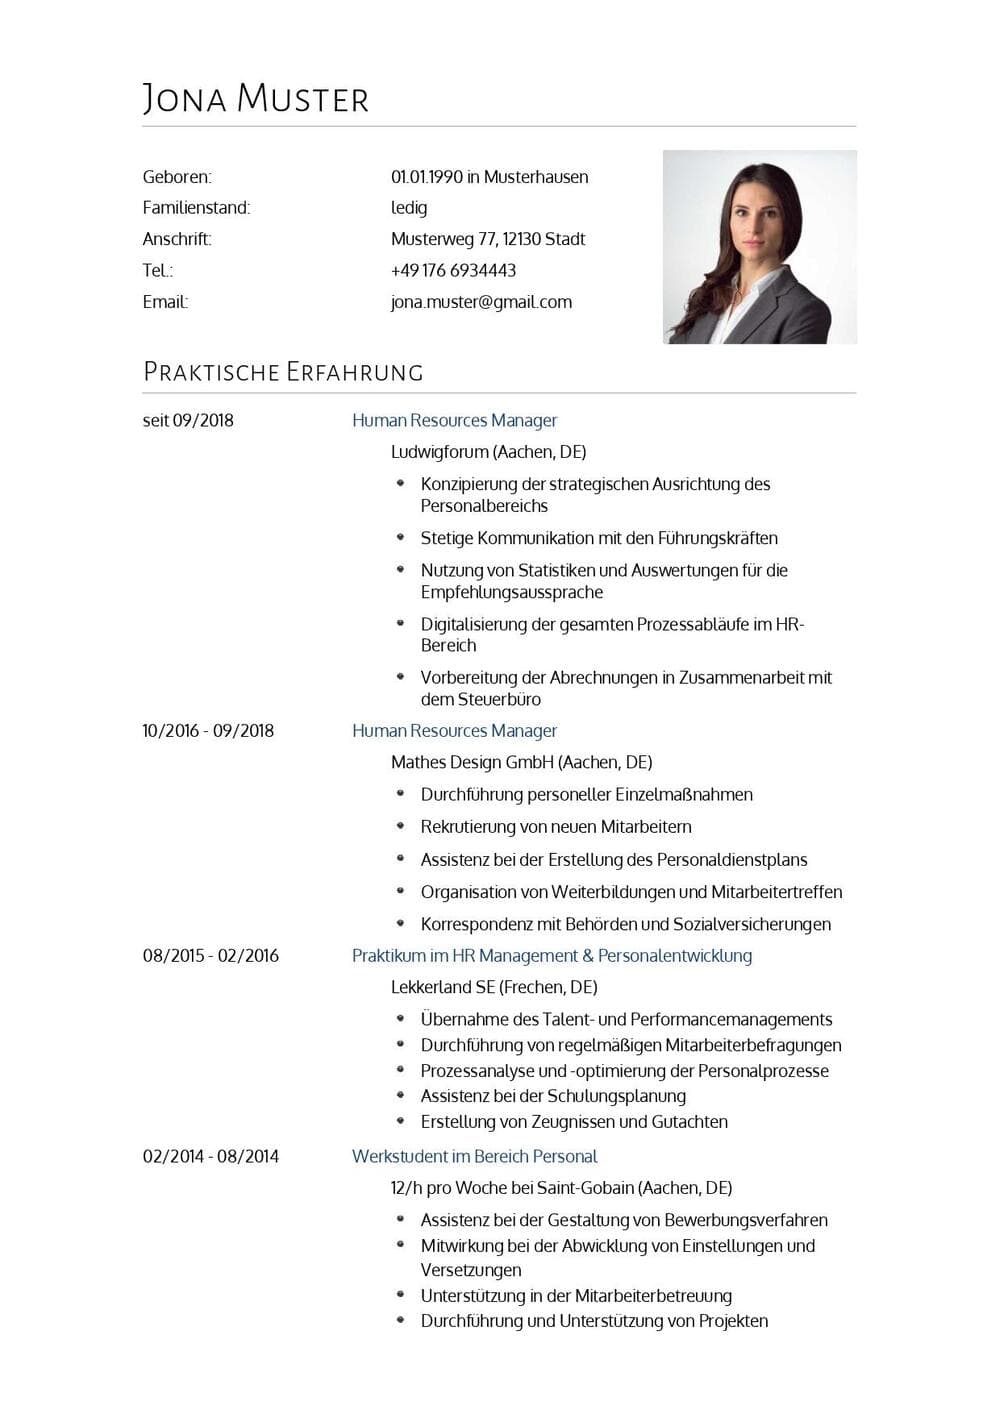 Lebenslauf HR-Manager / Personalmanagement (in Personalabteilung)